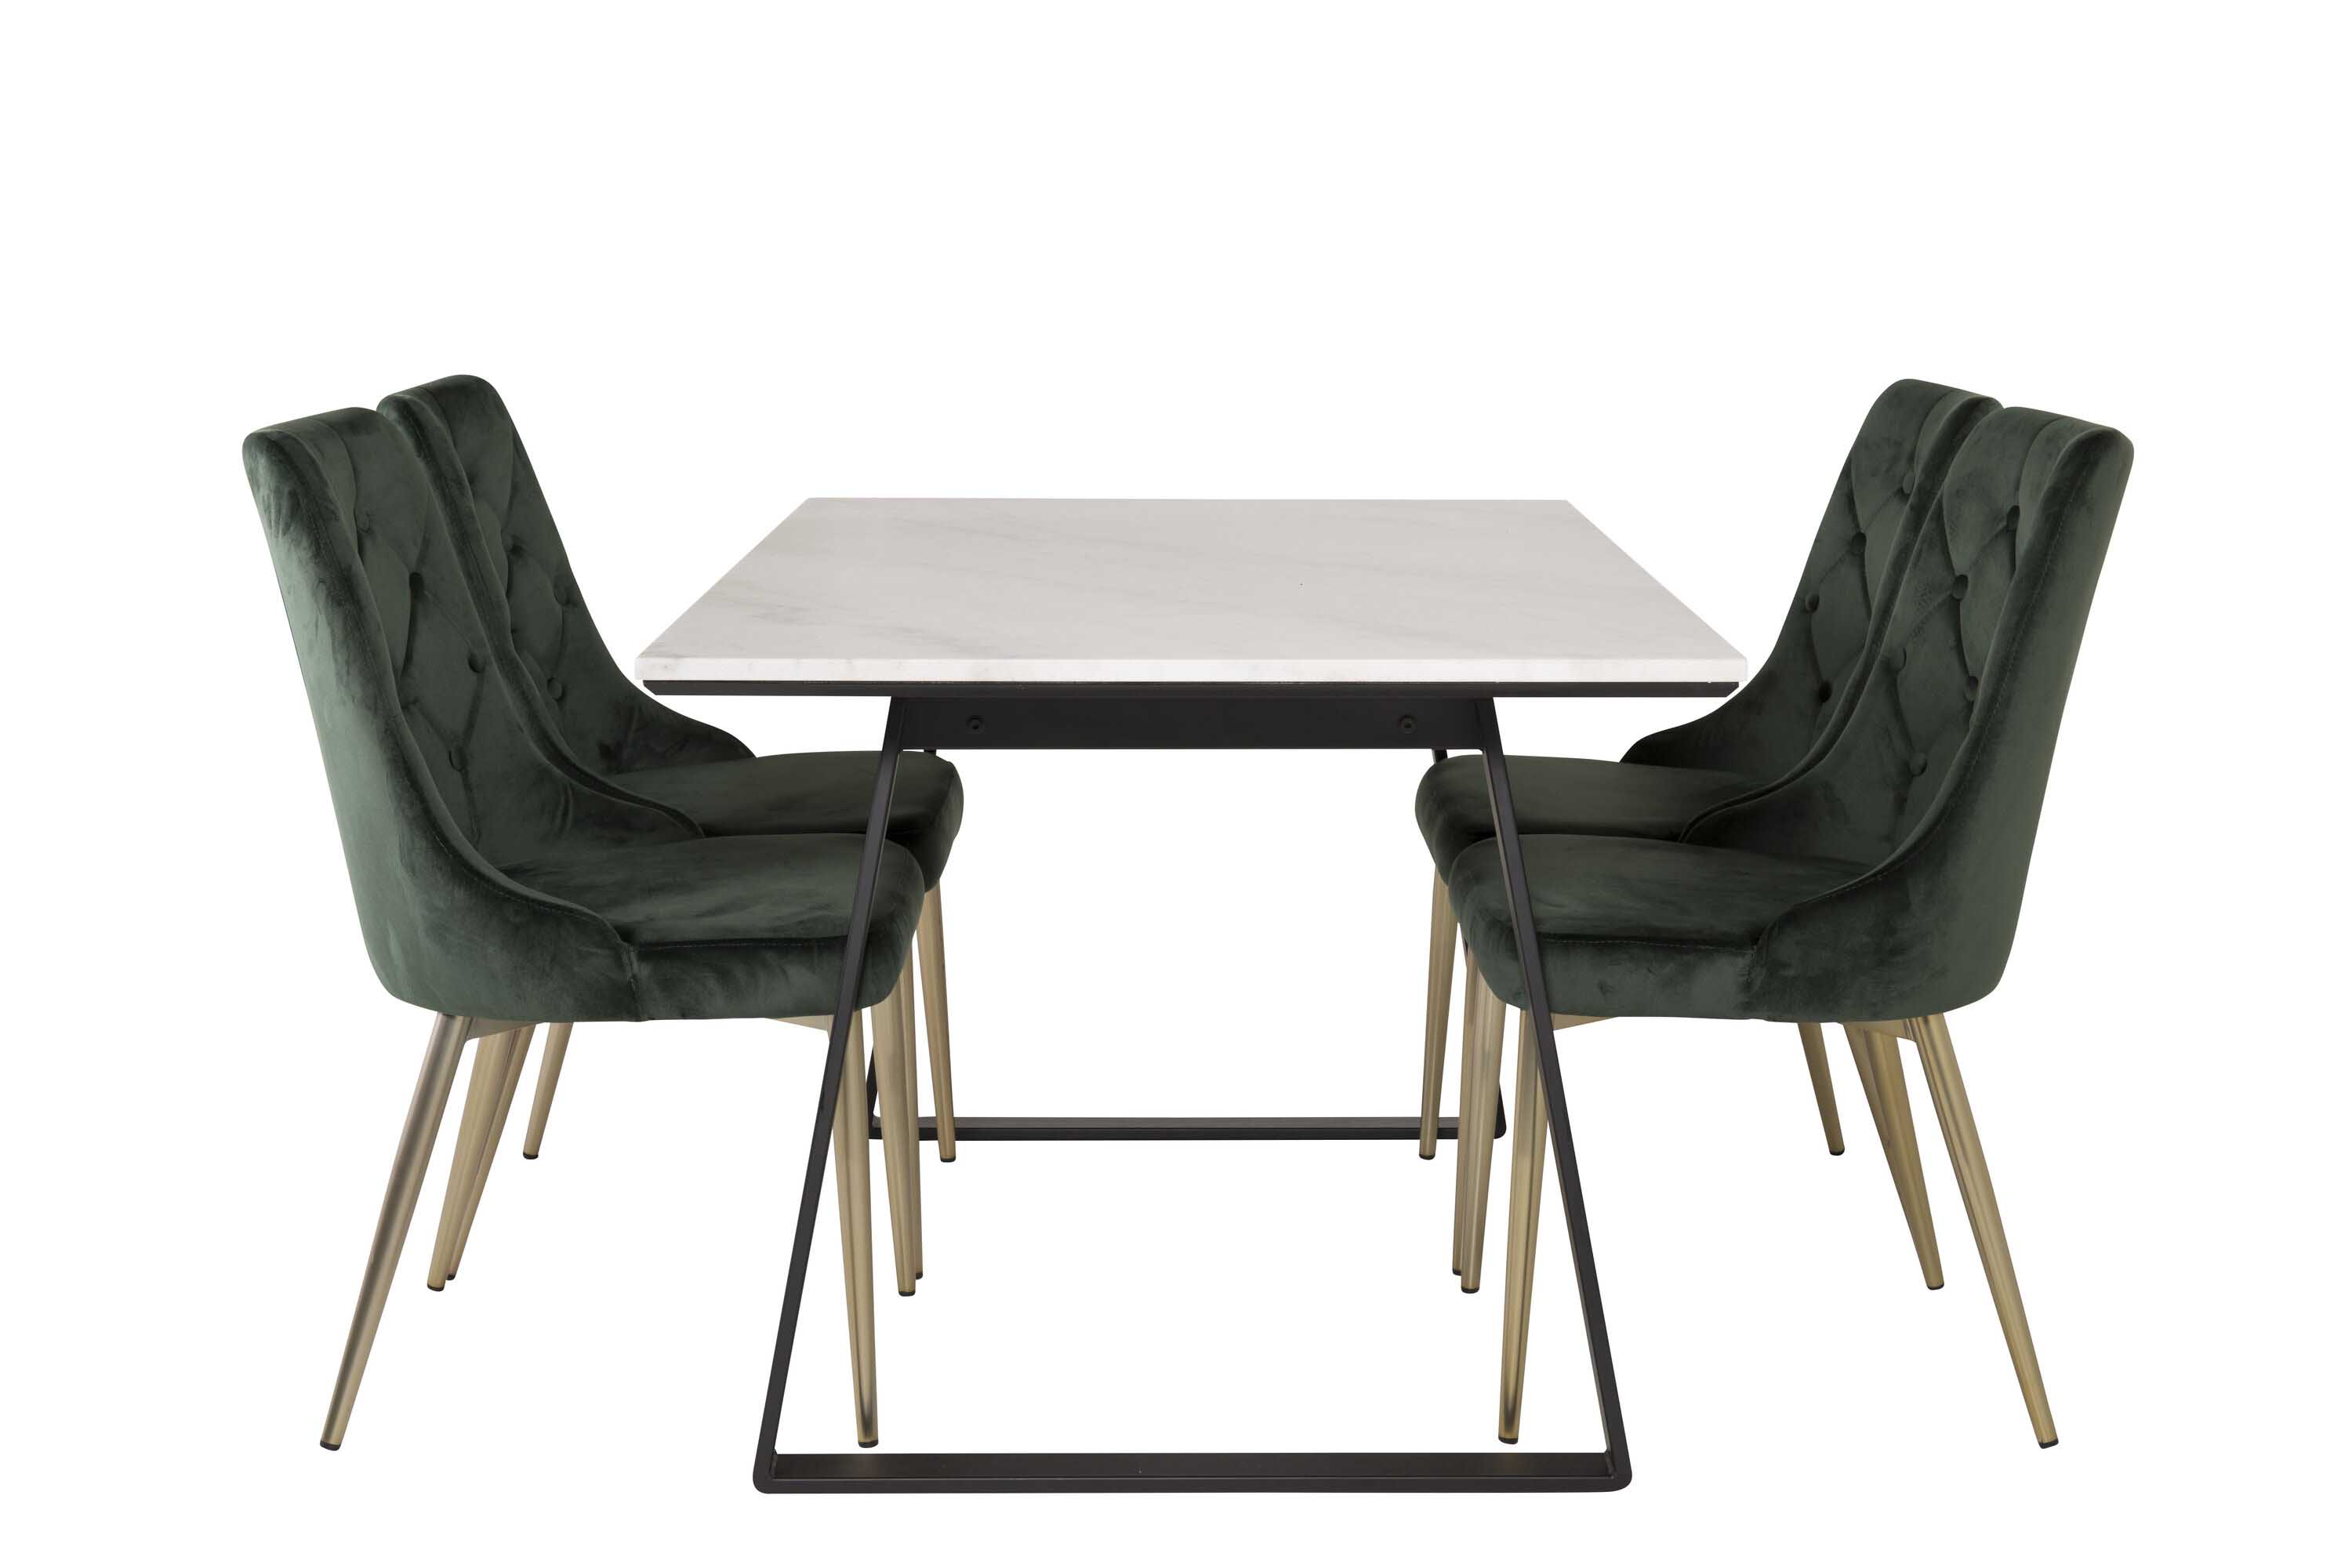 Venture Design Estelle & Velvet spisebordssæt Hvid/grøn 4 st stole & borde 140 x 90 cm